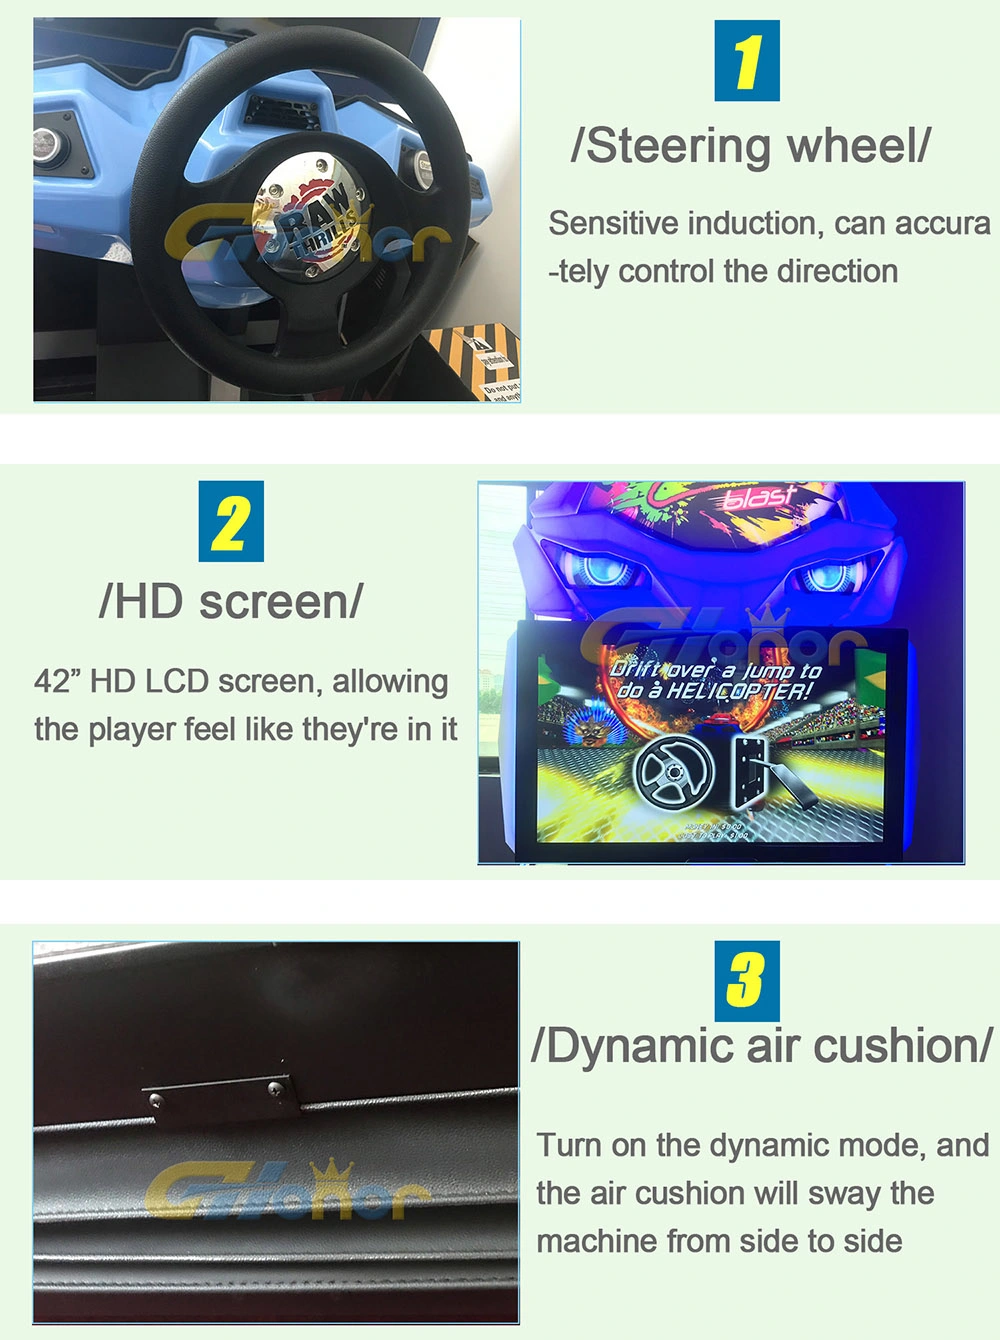 Most Popular Arcade Dynamic Car Racing Coin Operated Simulator Racing Game Machine Arcade Game Machine Arcade Racing Game Machine for Play